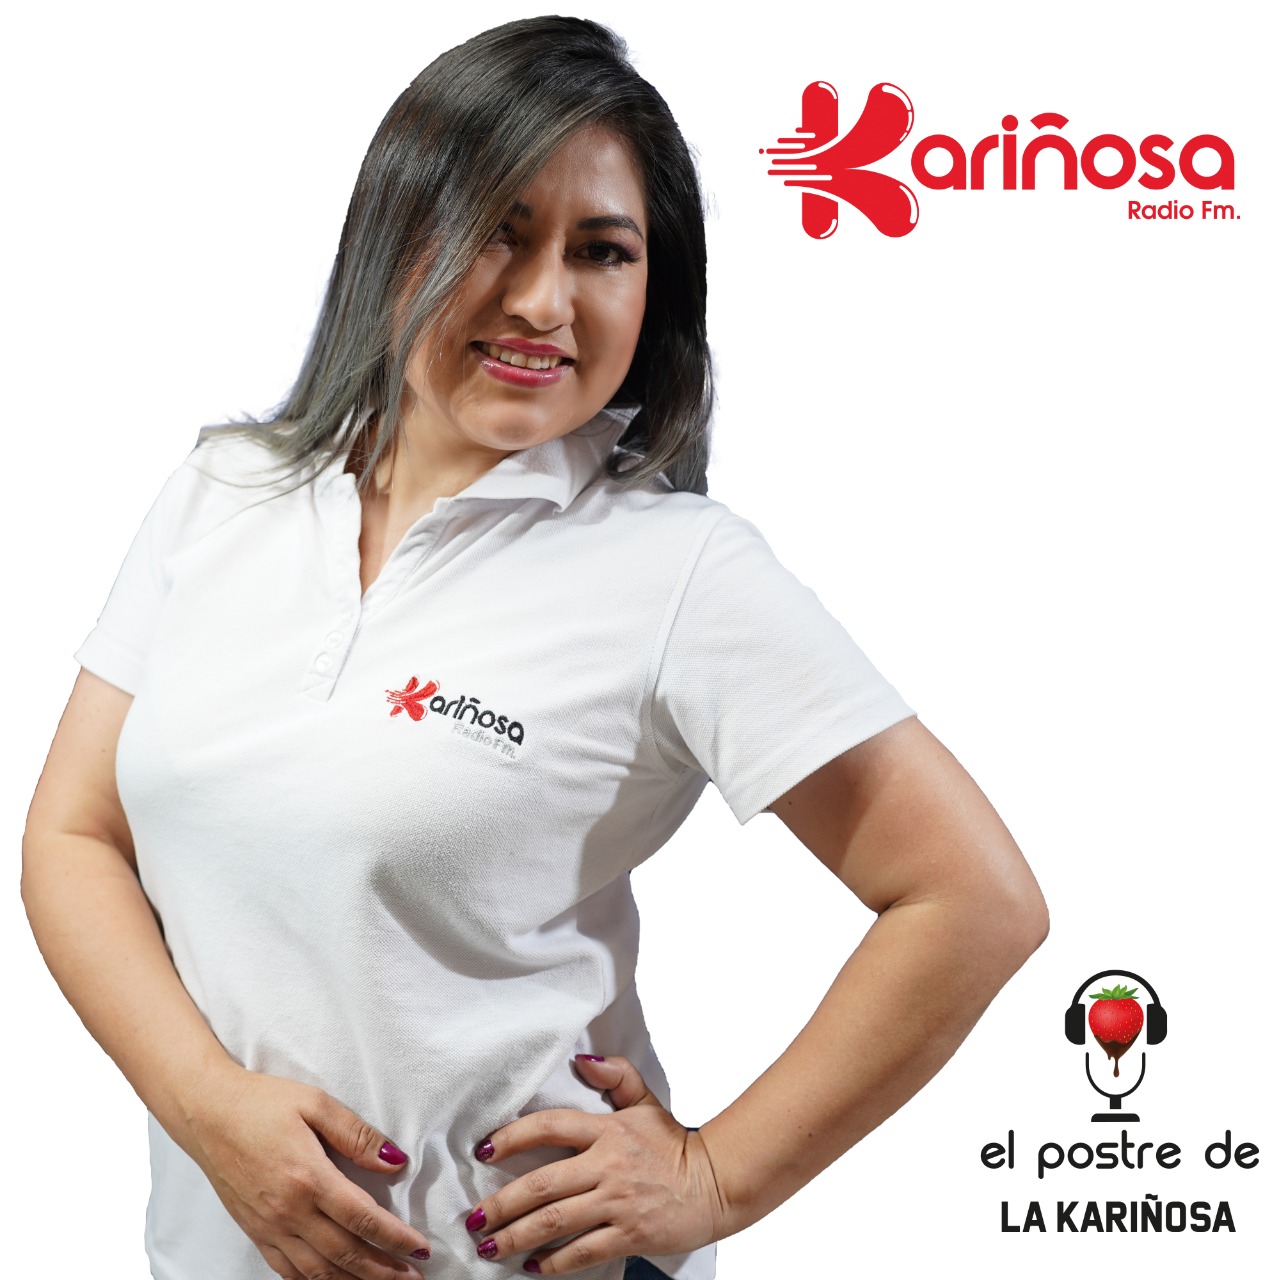 Radio ‘La Kariñosa’ conquista las audiencias lojanas